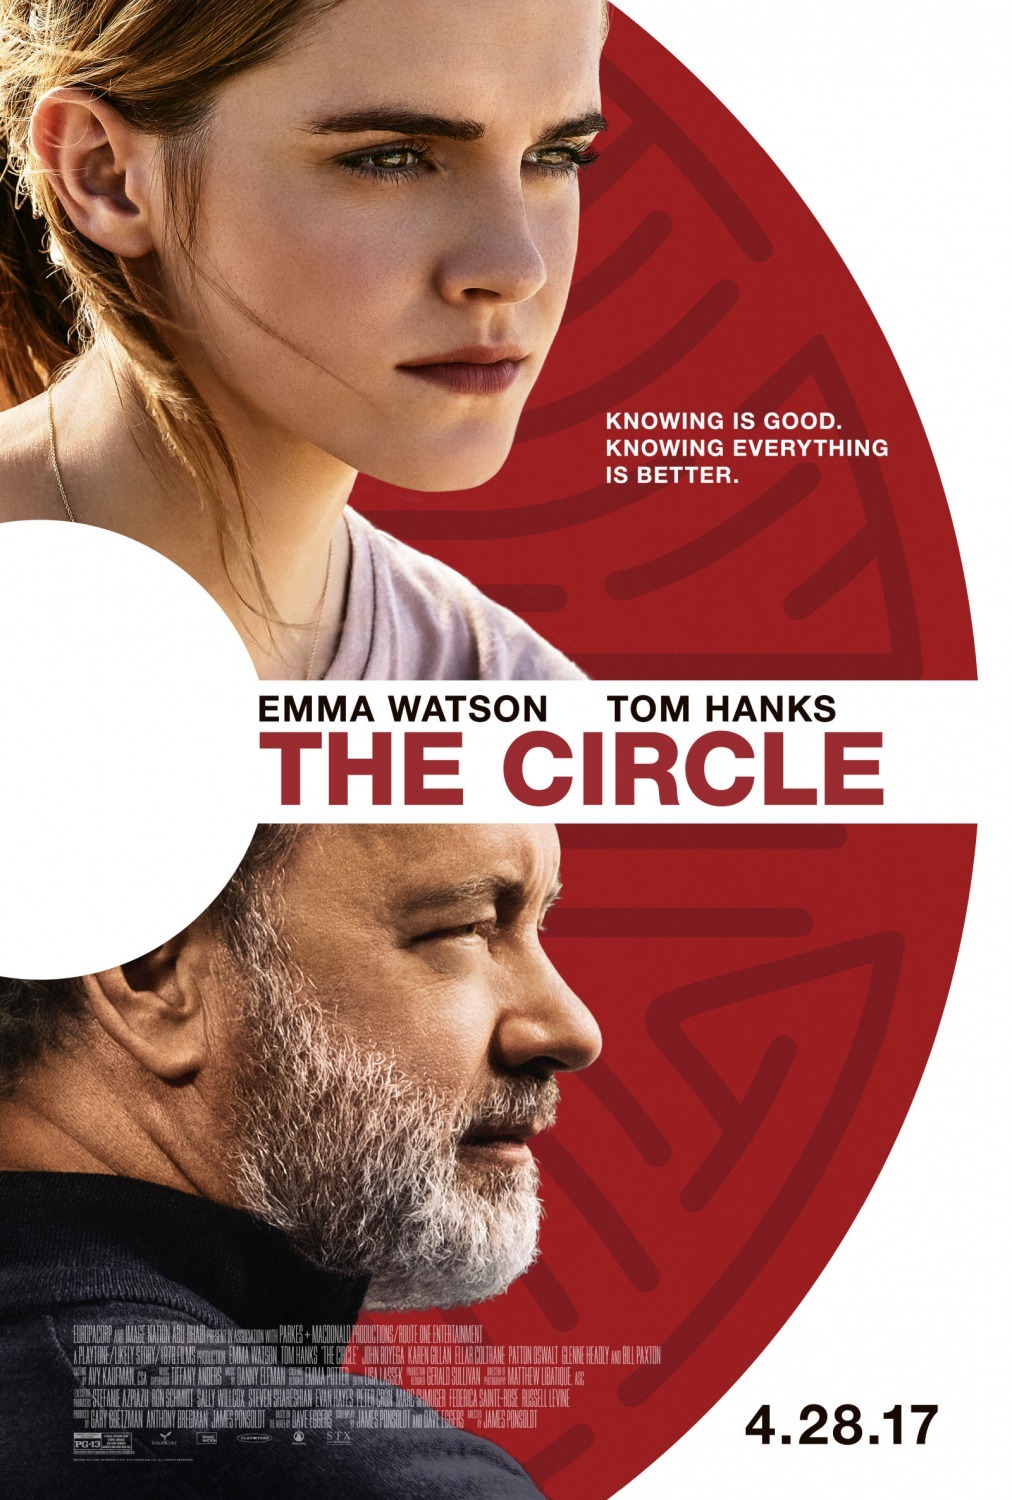 The Circle Poster.jpg